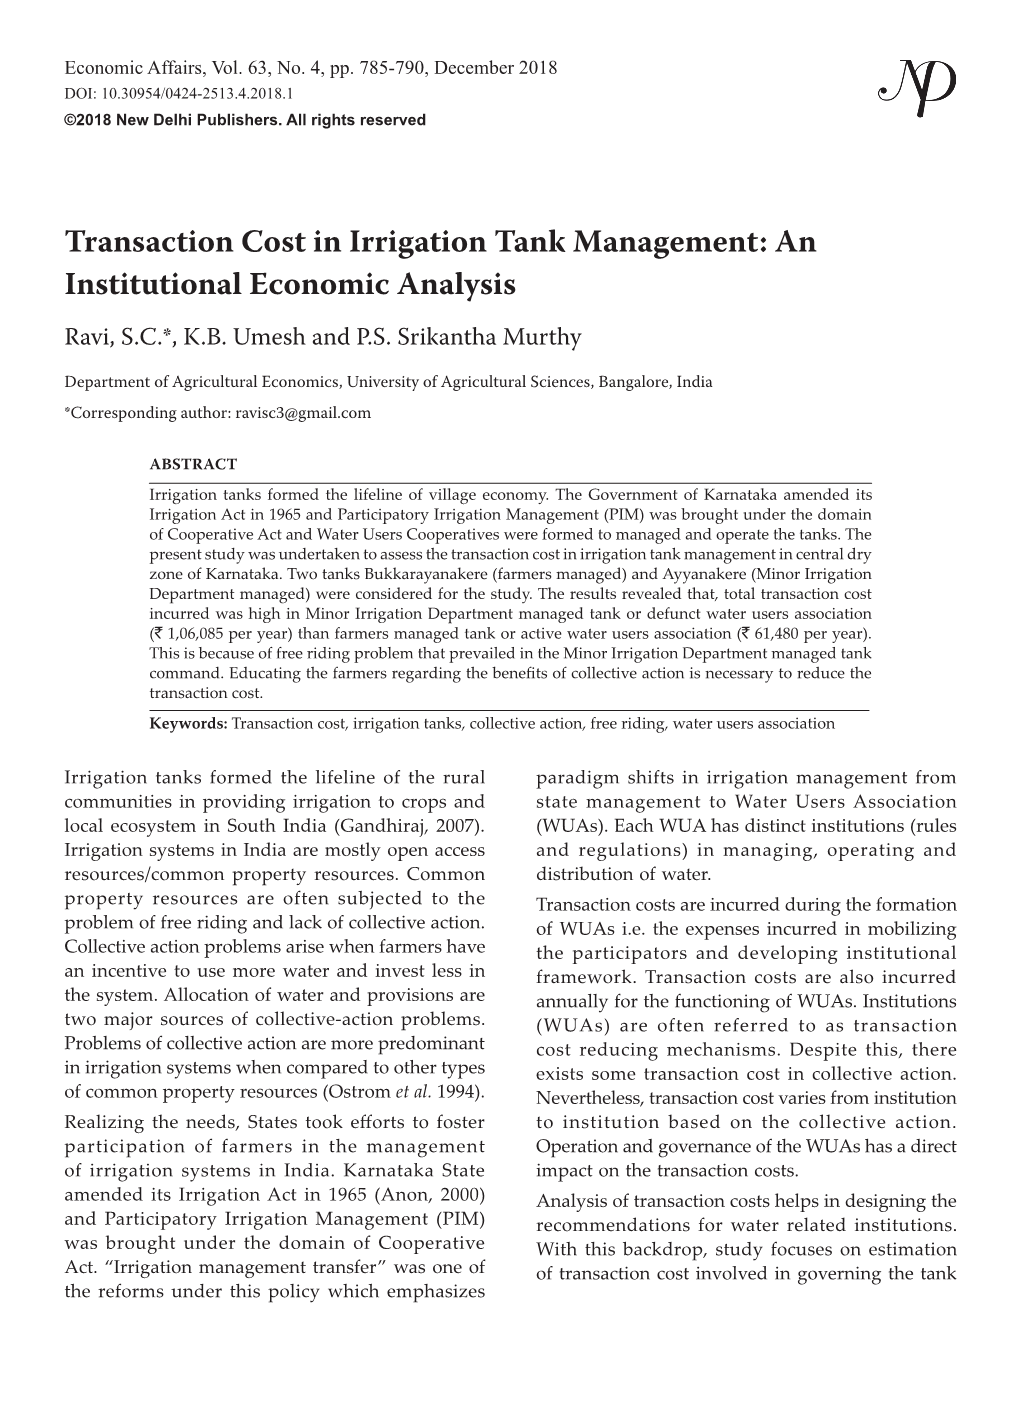 Transaction Cost in Irrigation Tank Management: an Institutional Economic Analysis Ravi, S.C.*, K.B